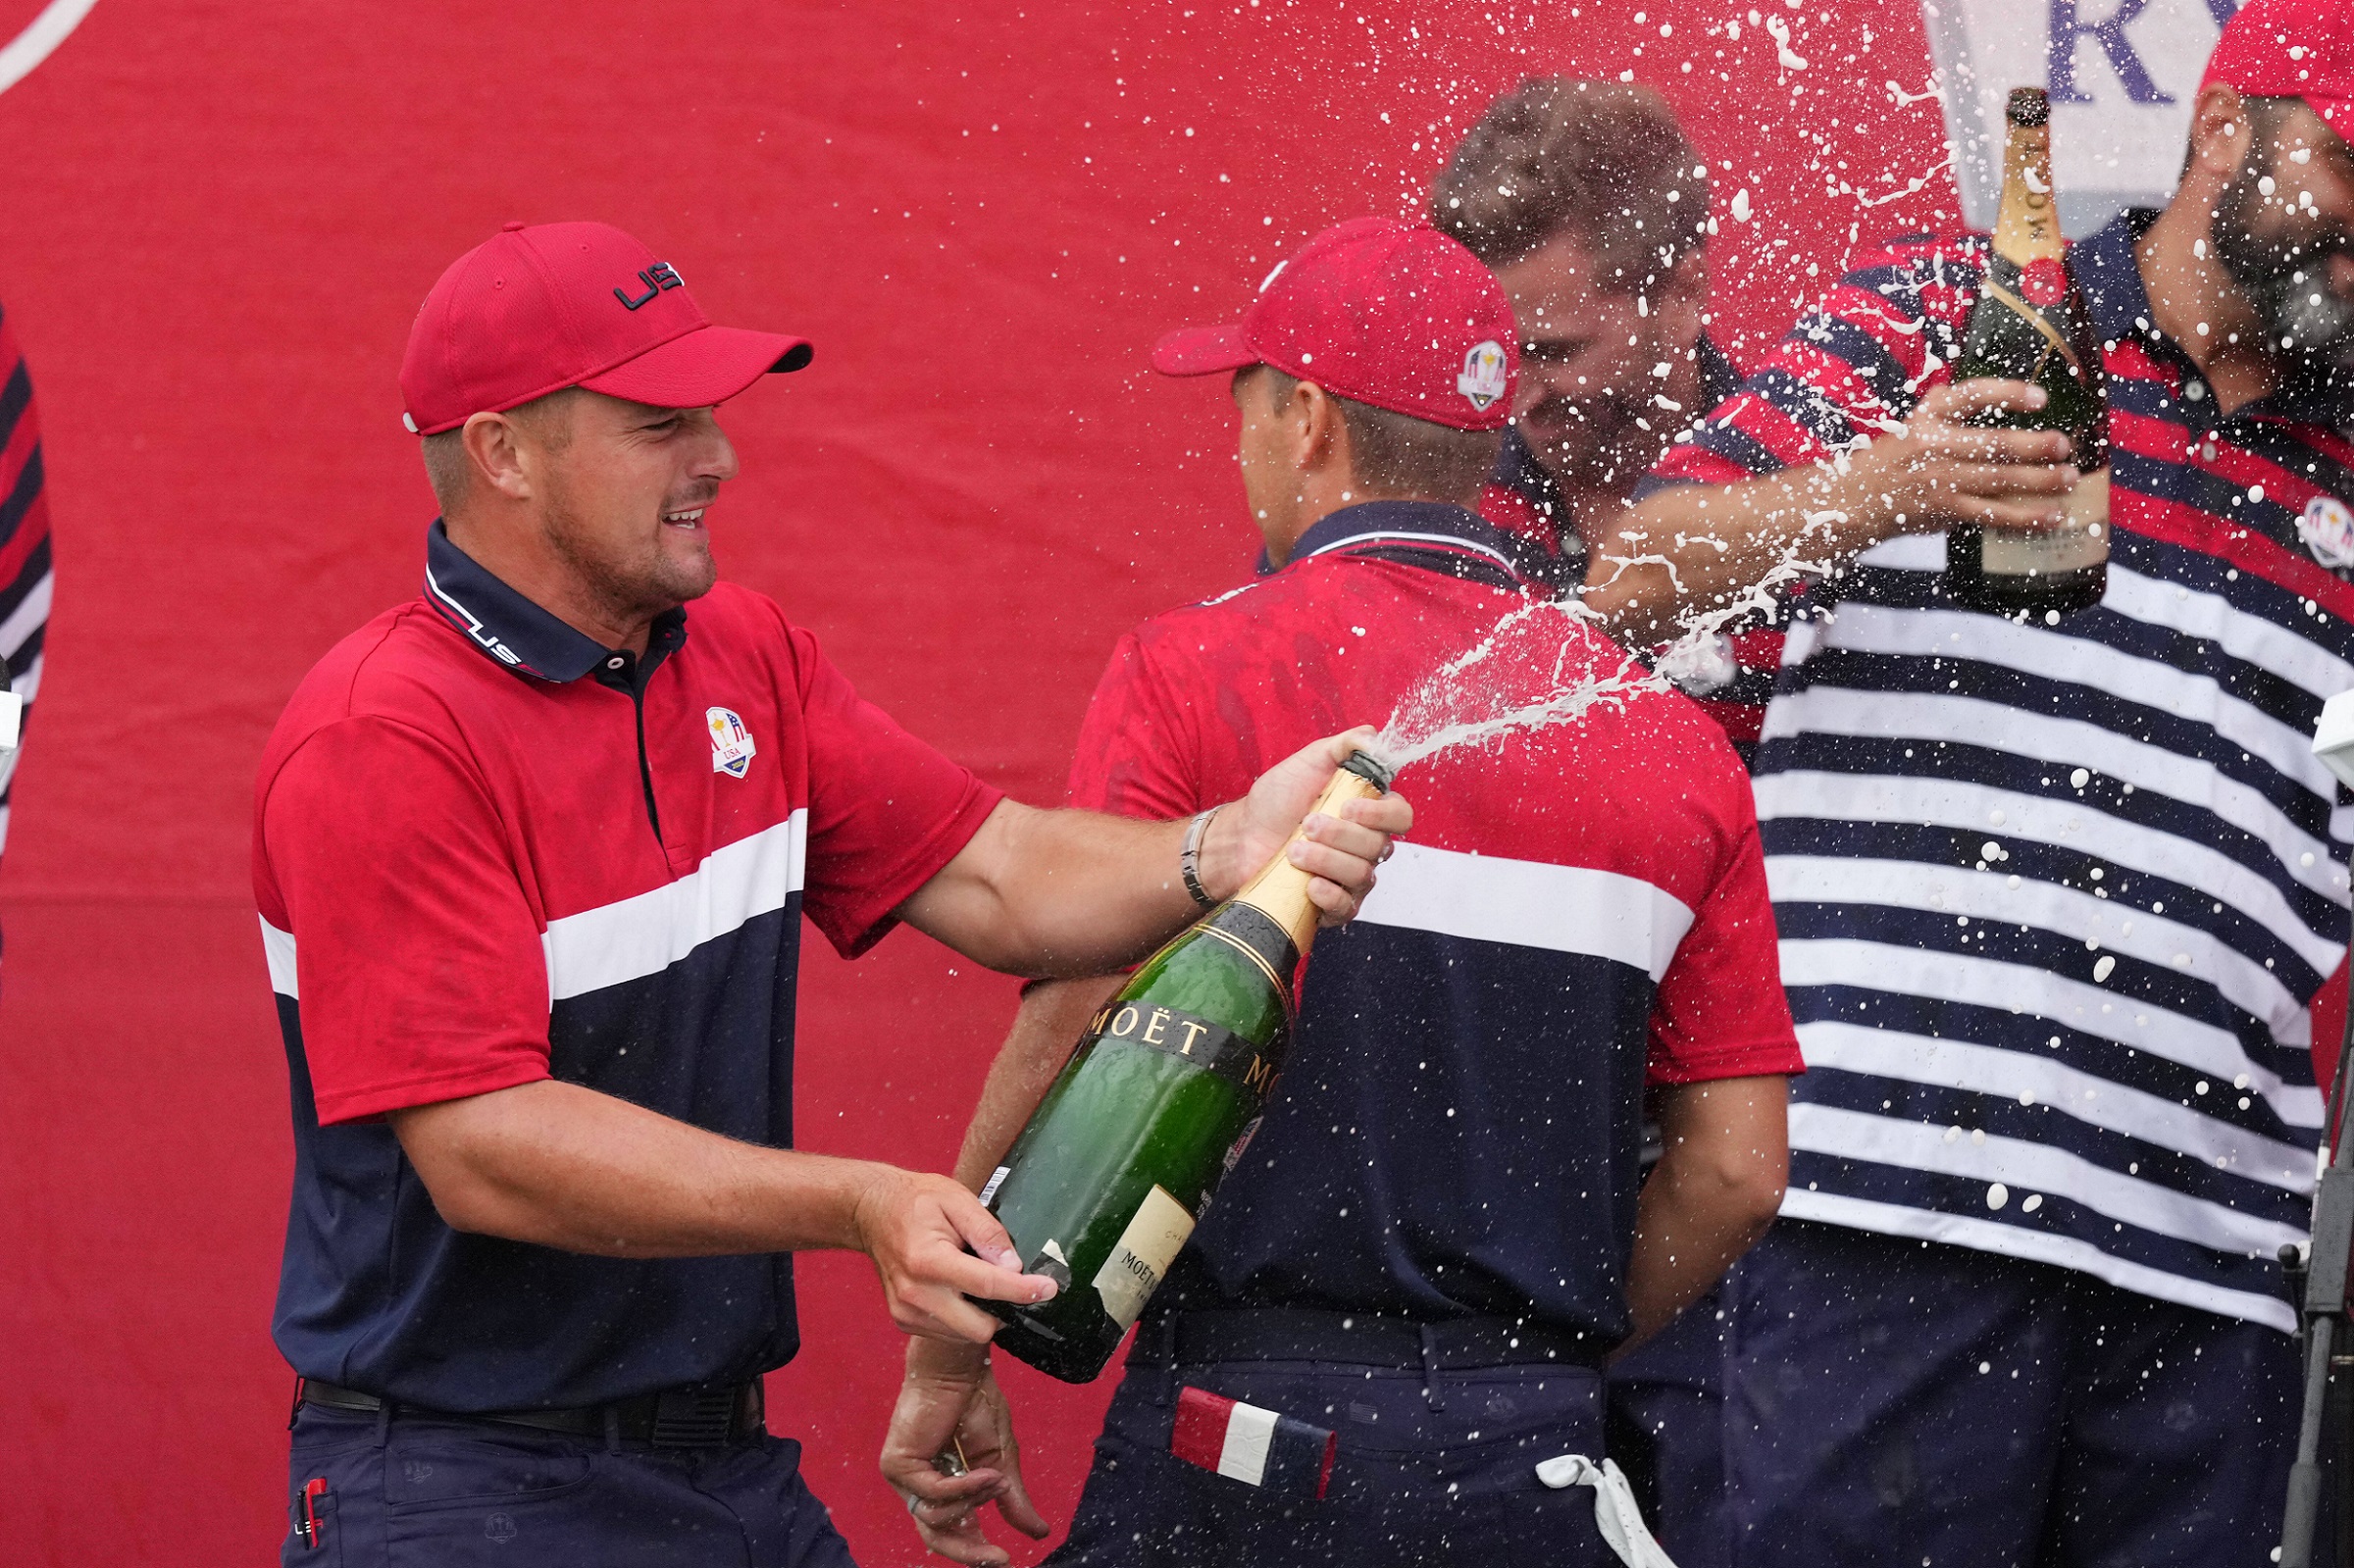 Member of formula one team sprays champagne